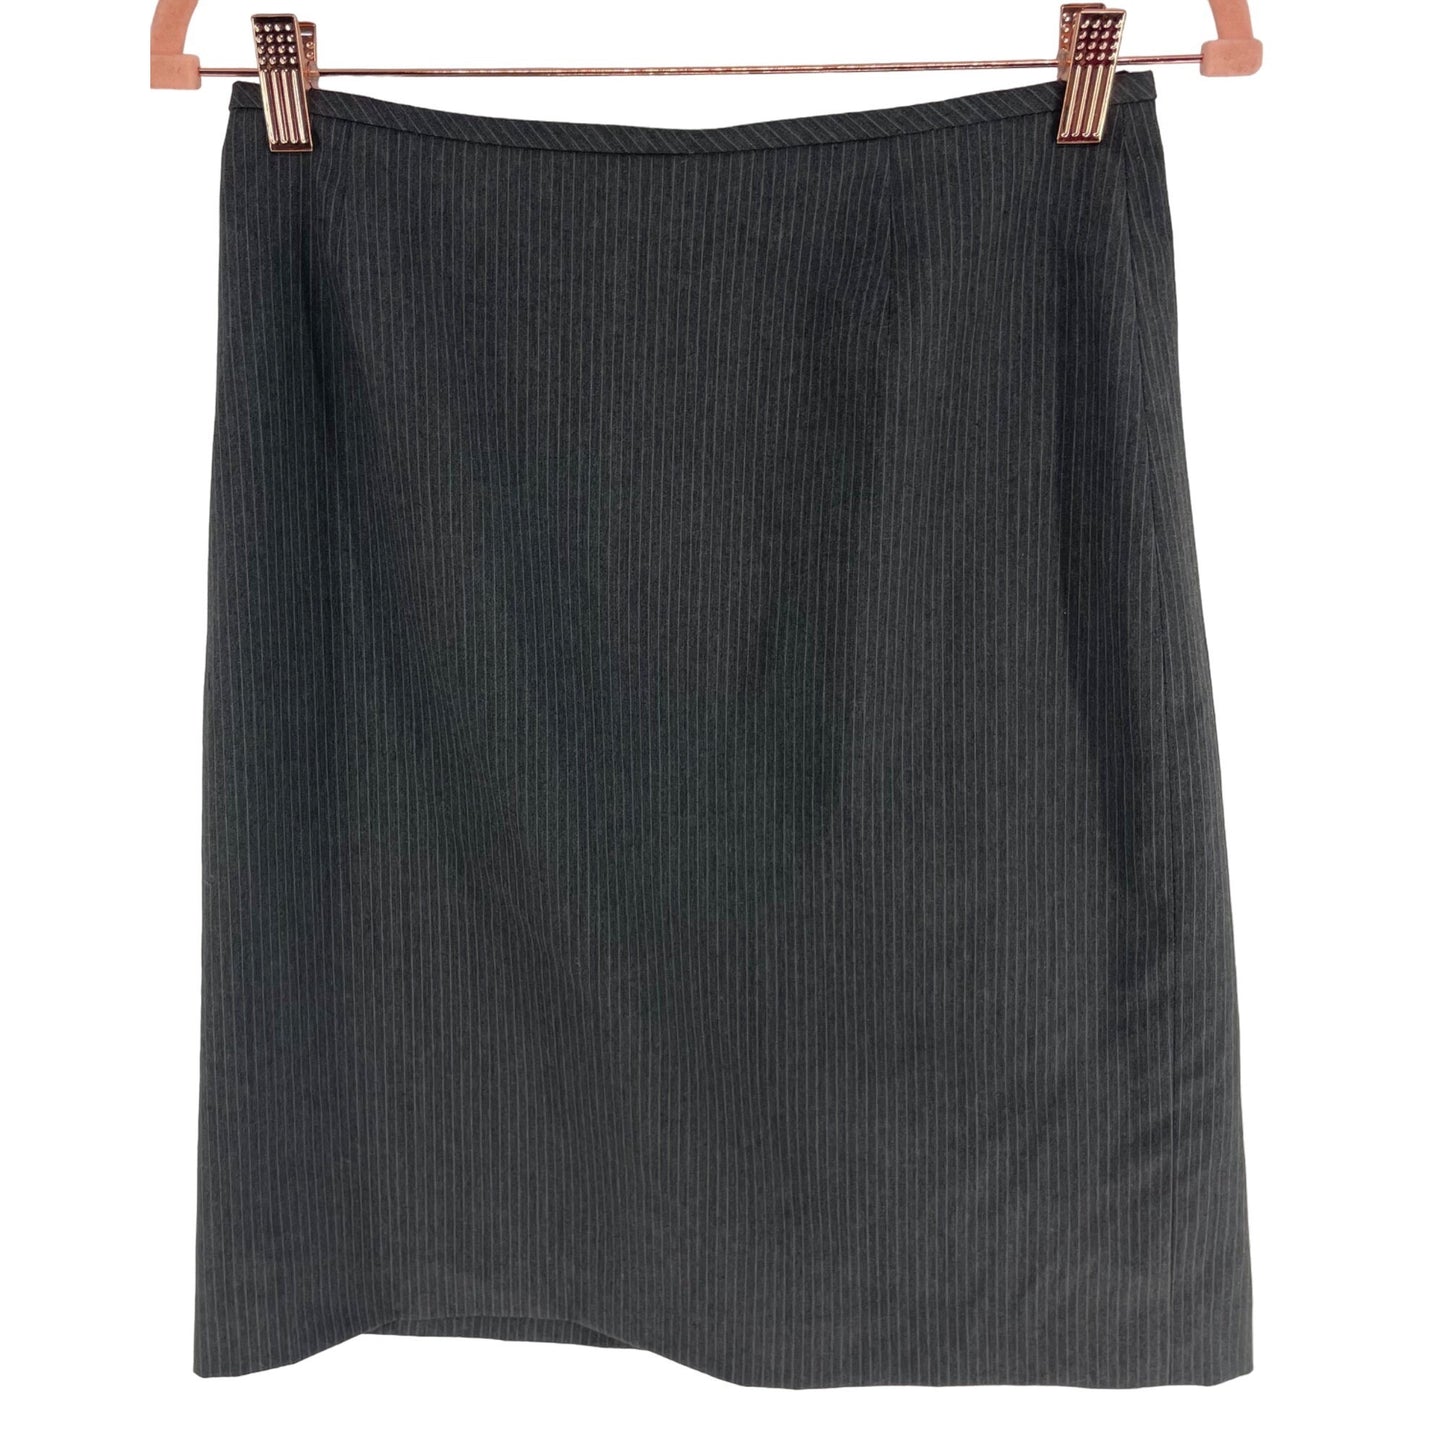 Women's Size 4P Dark Grey Pinstriped Pencil Skirt